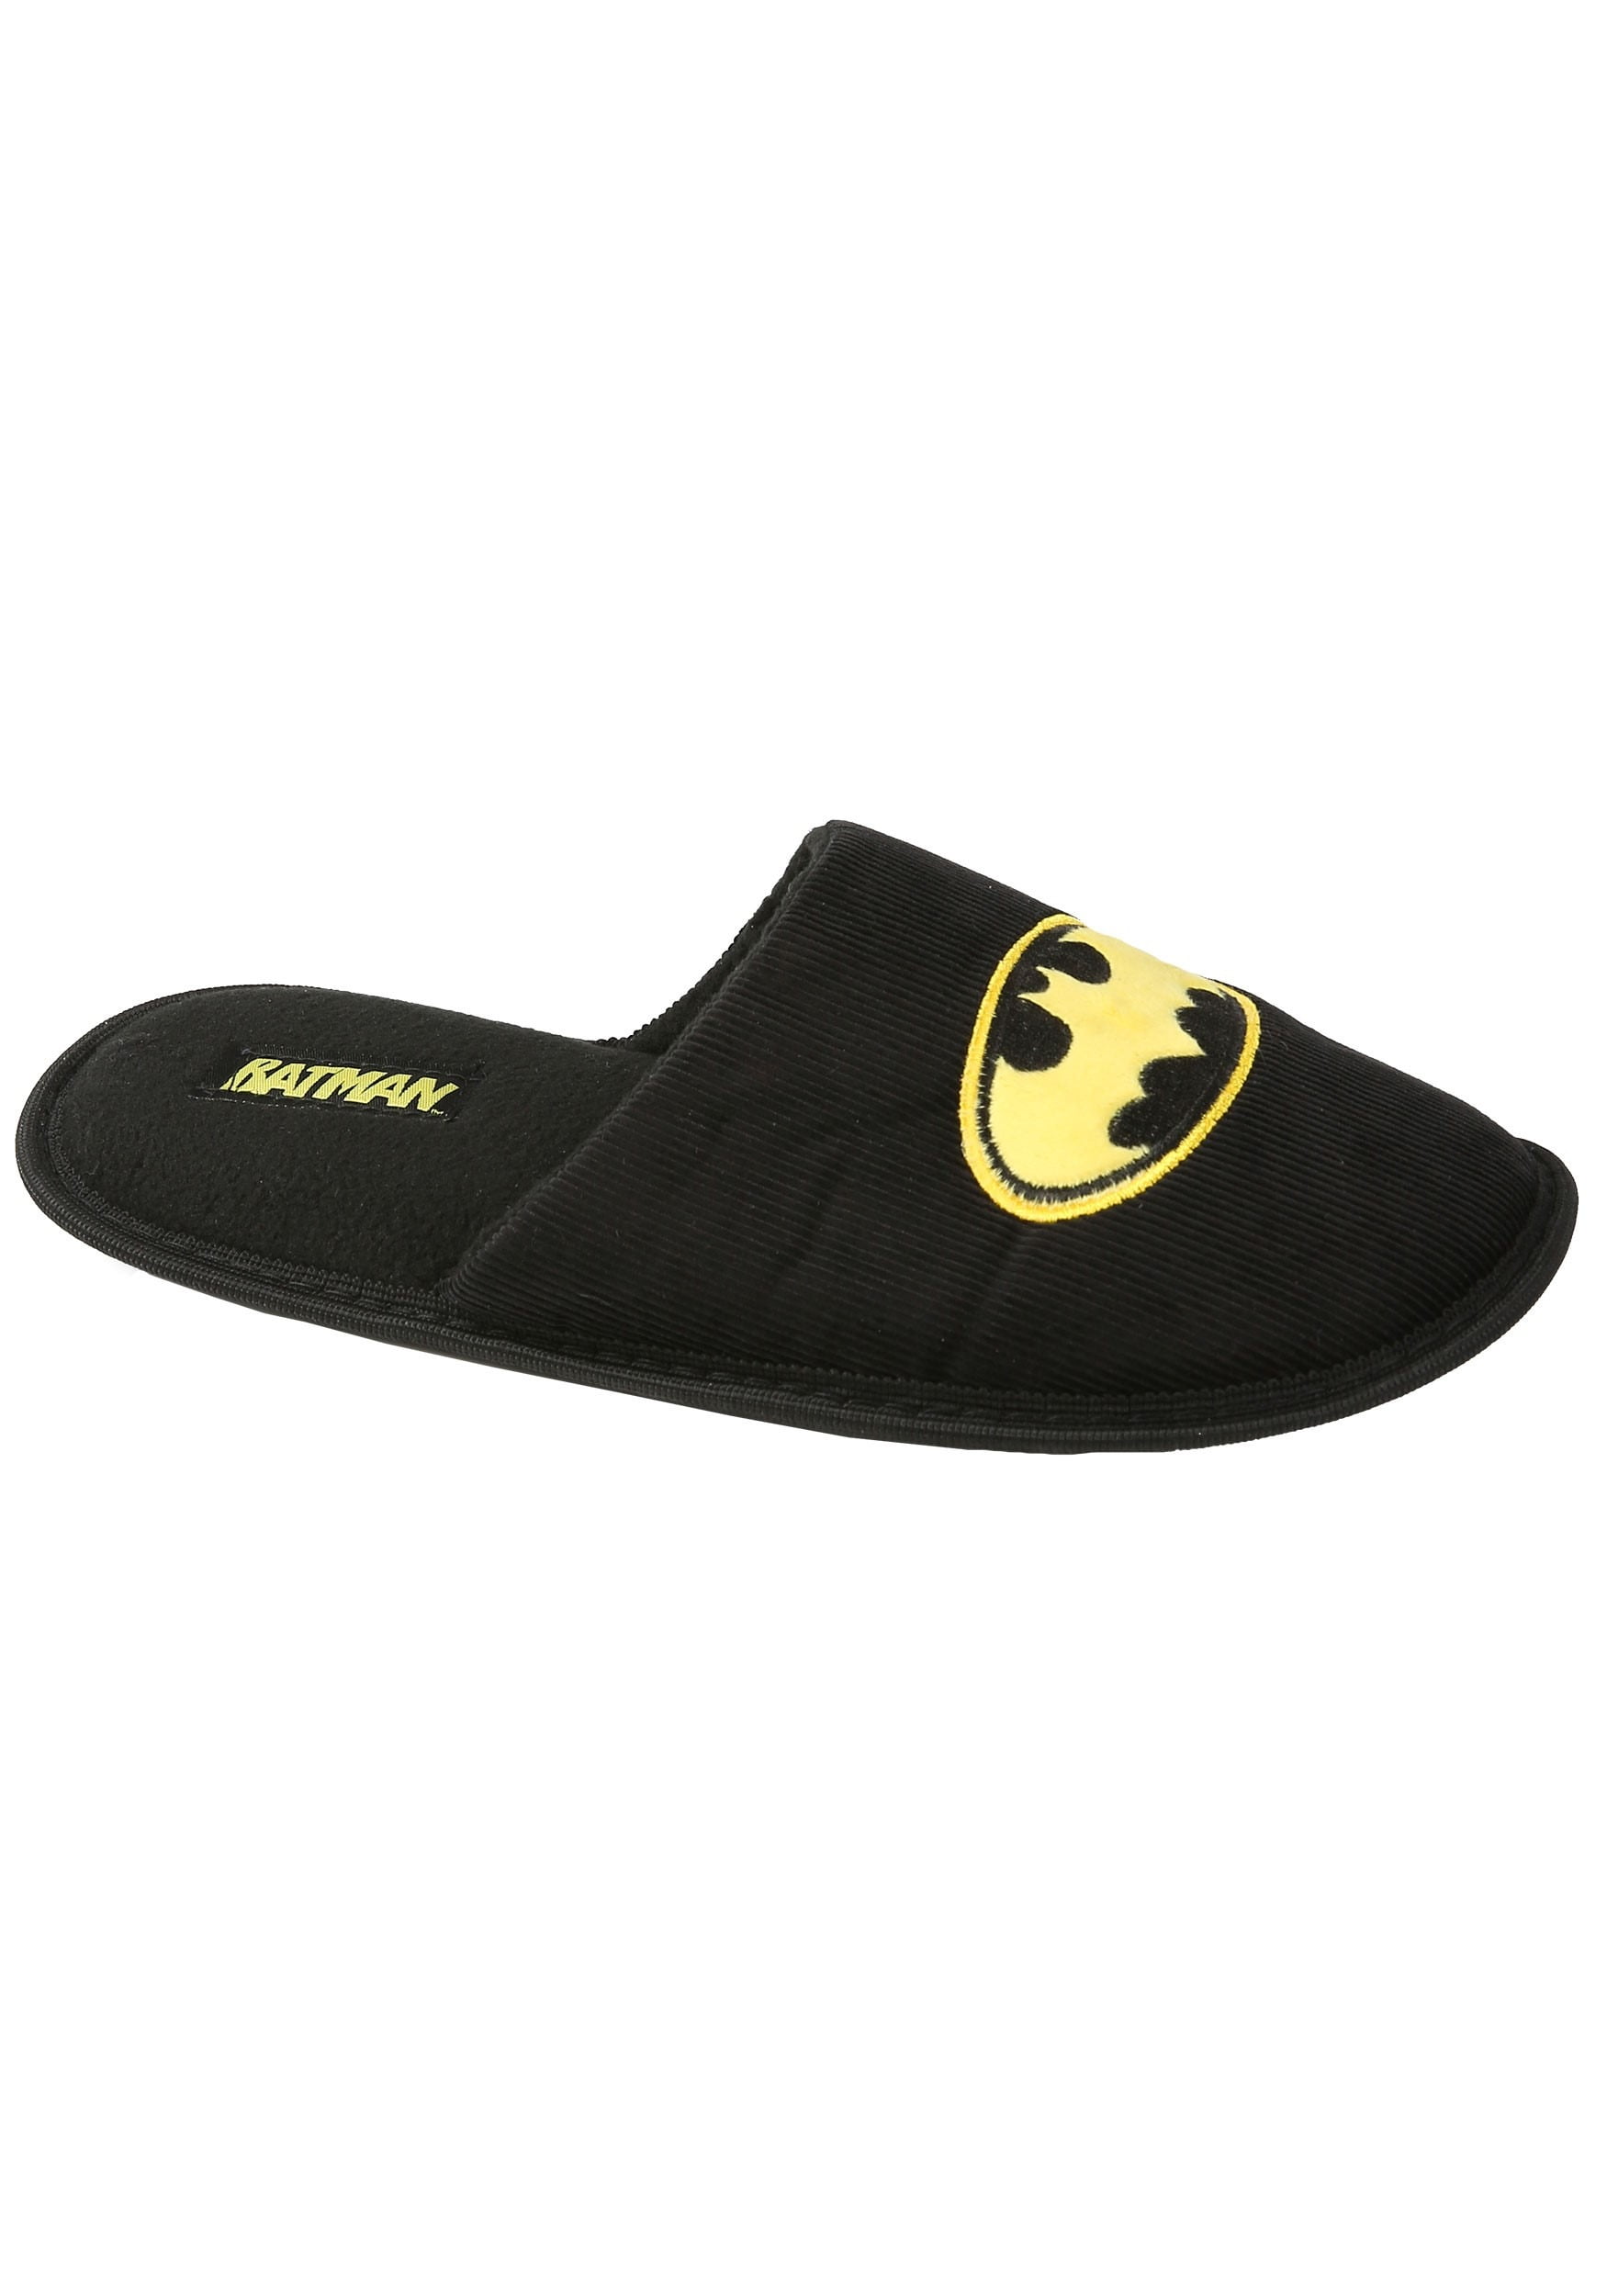 batman slippers walmart